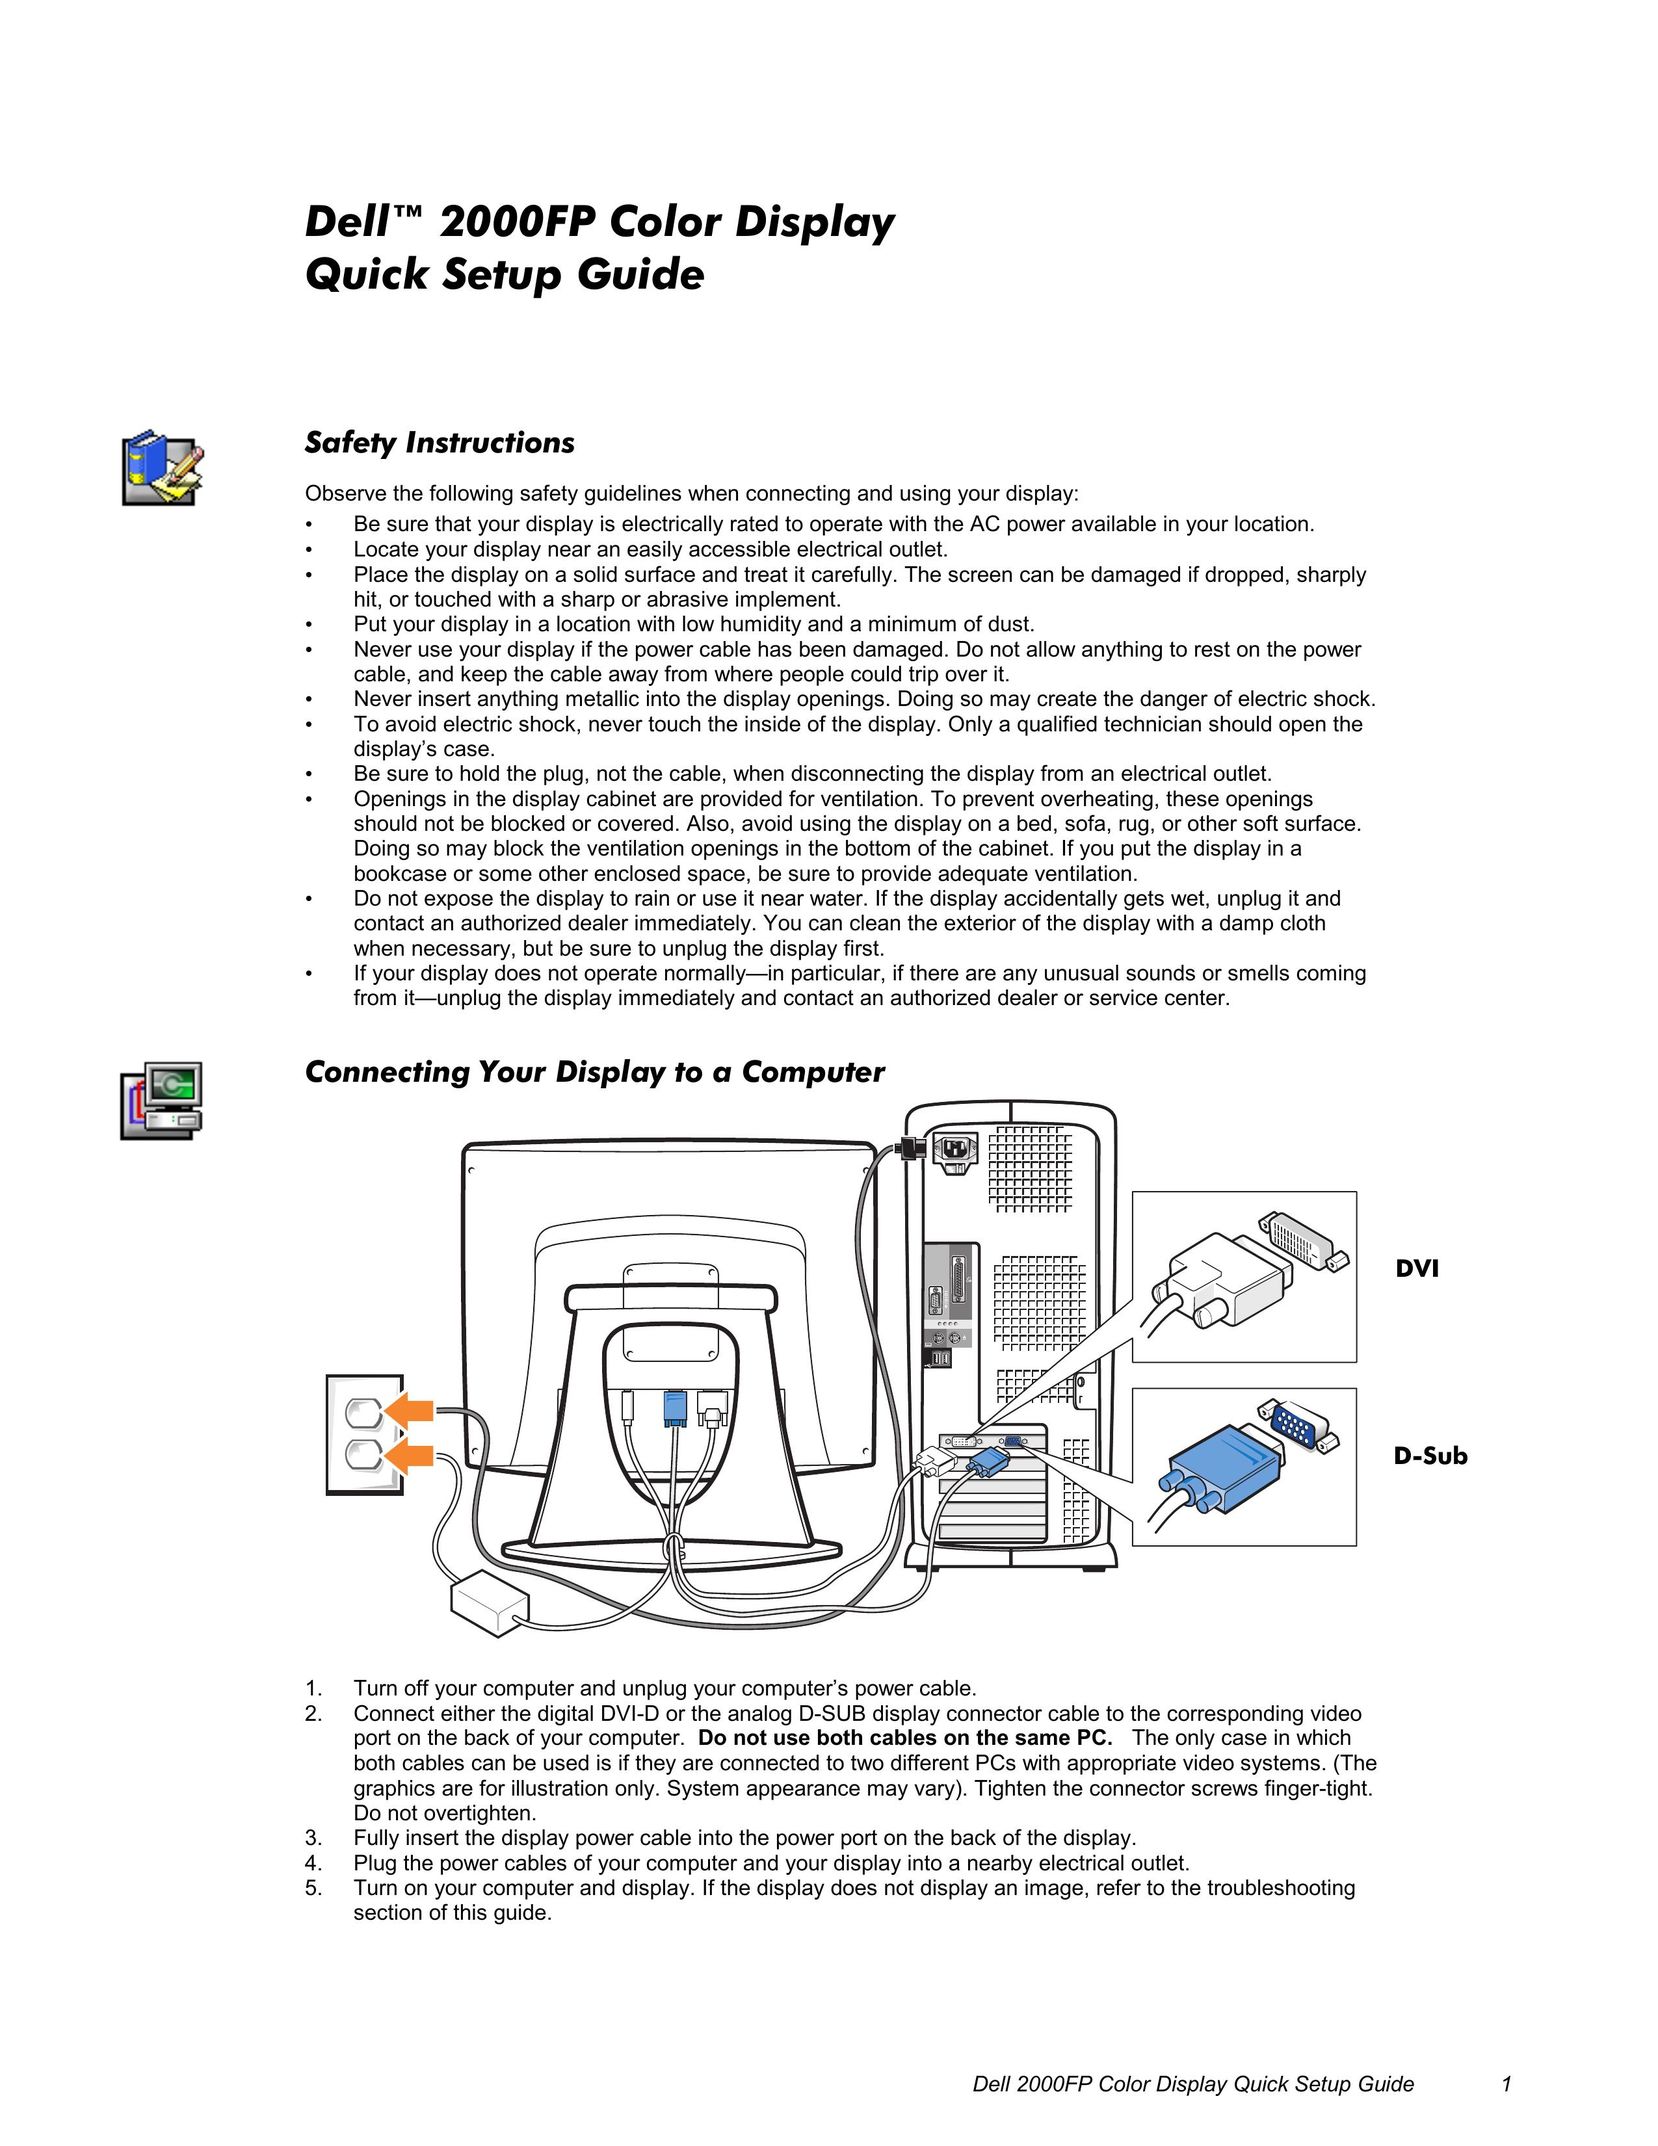 Dell 2000FP Car Video System User Manual